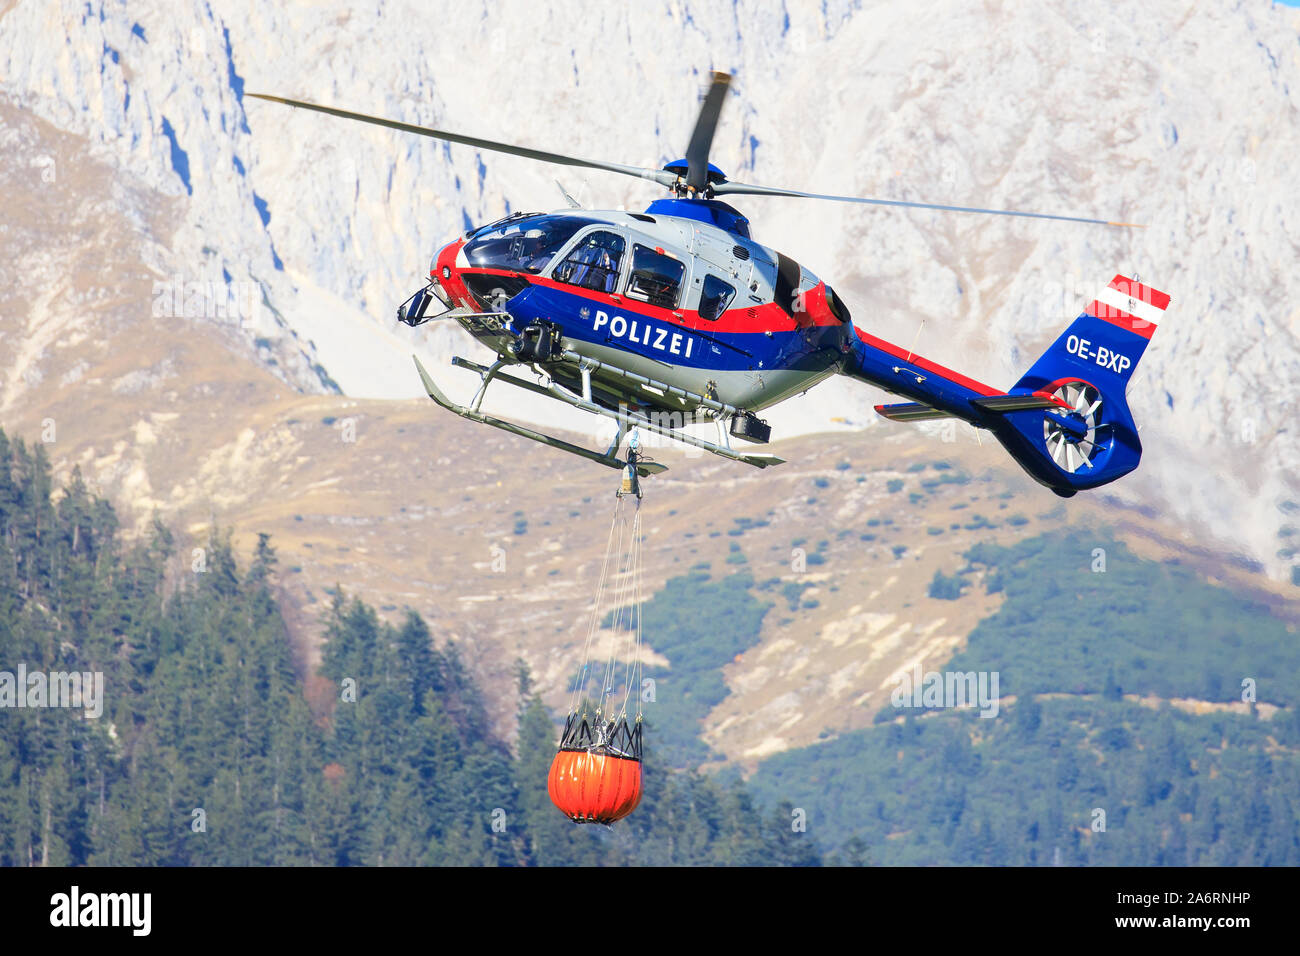 Innsbruck/Austria October 26, 2019:   OE-BXP Airbus Helicopters H135 / EC135P3 at InnsbruckAirport. Stock Photo